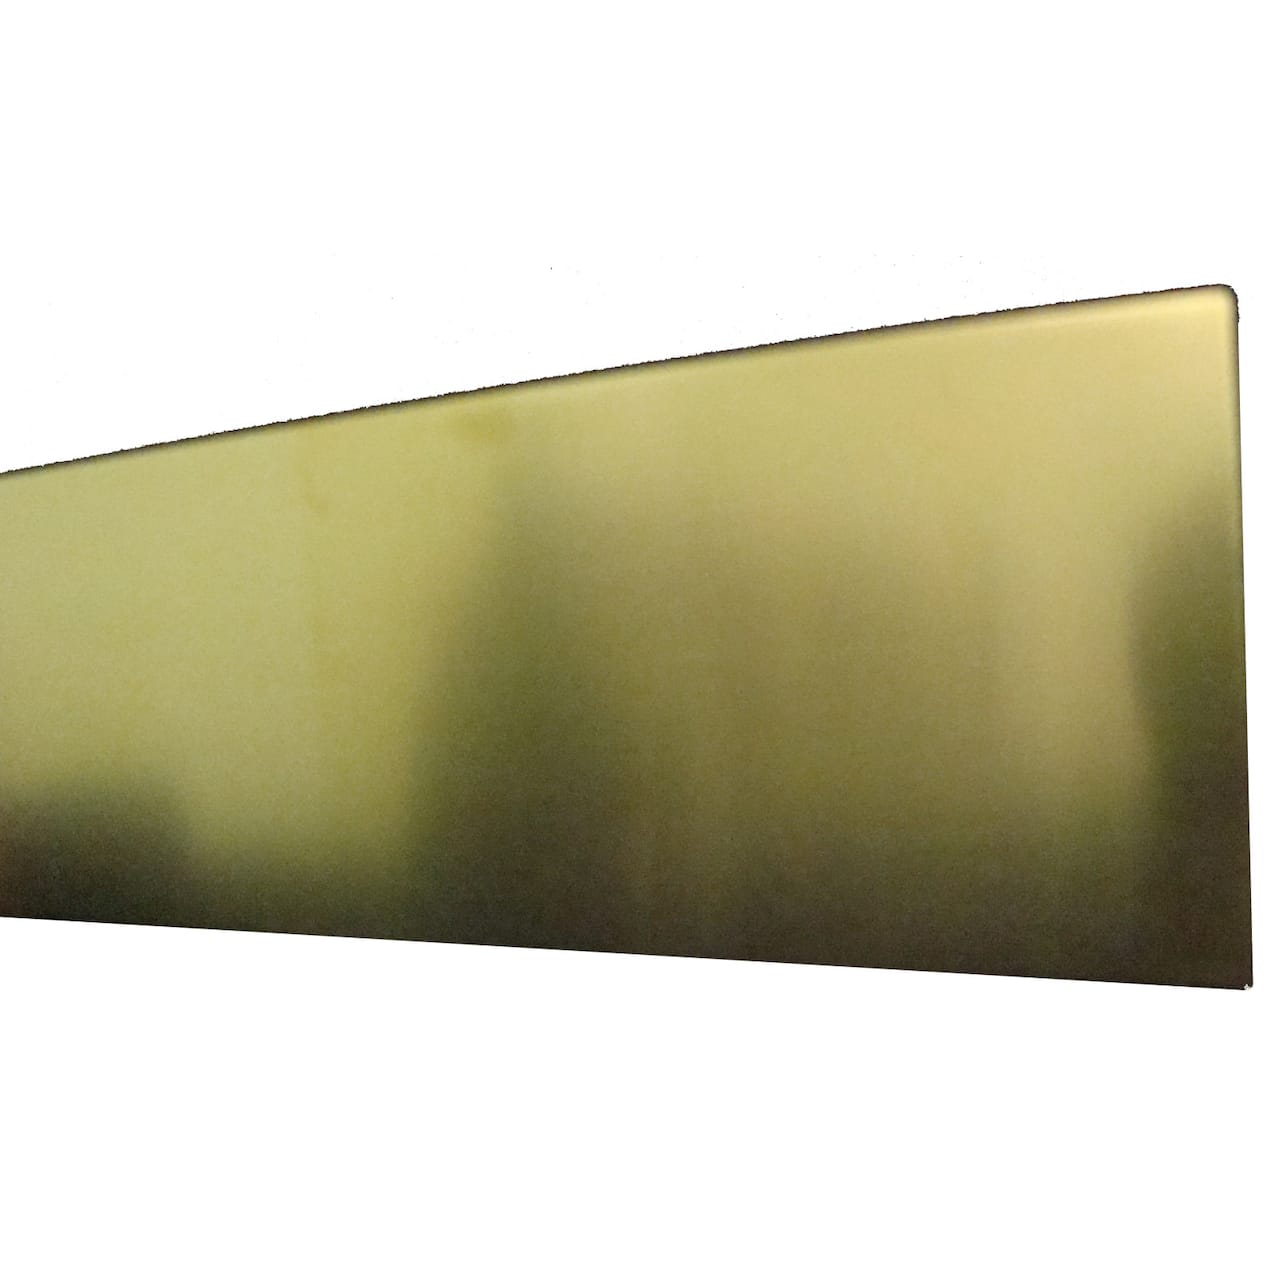 K&S® Engineering Brass Metal Strip